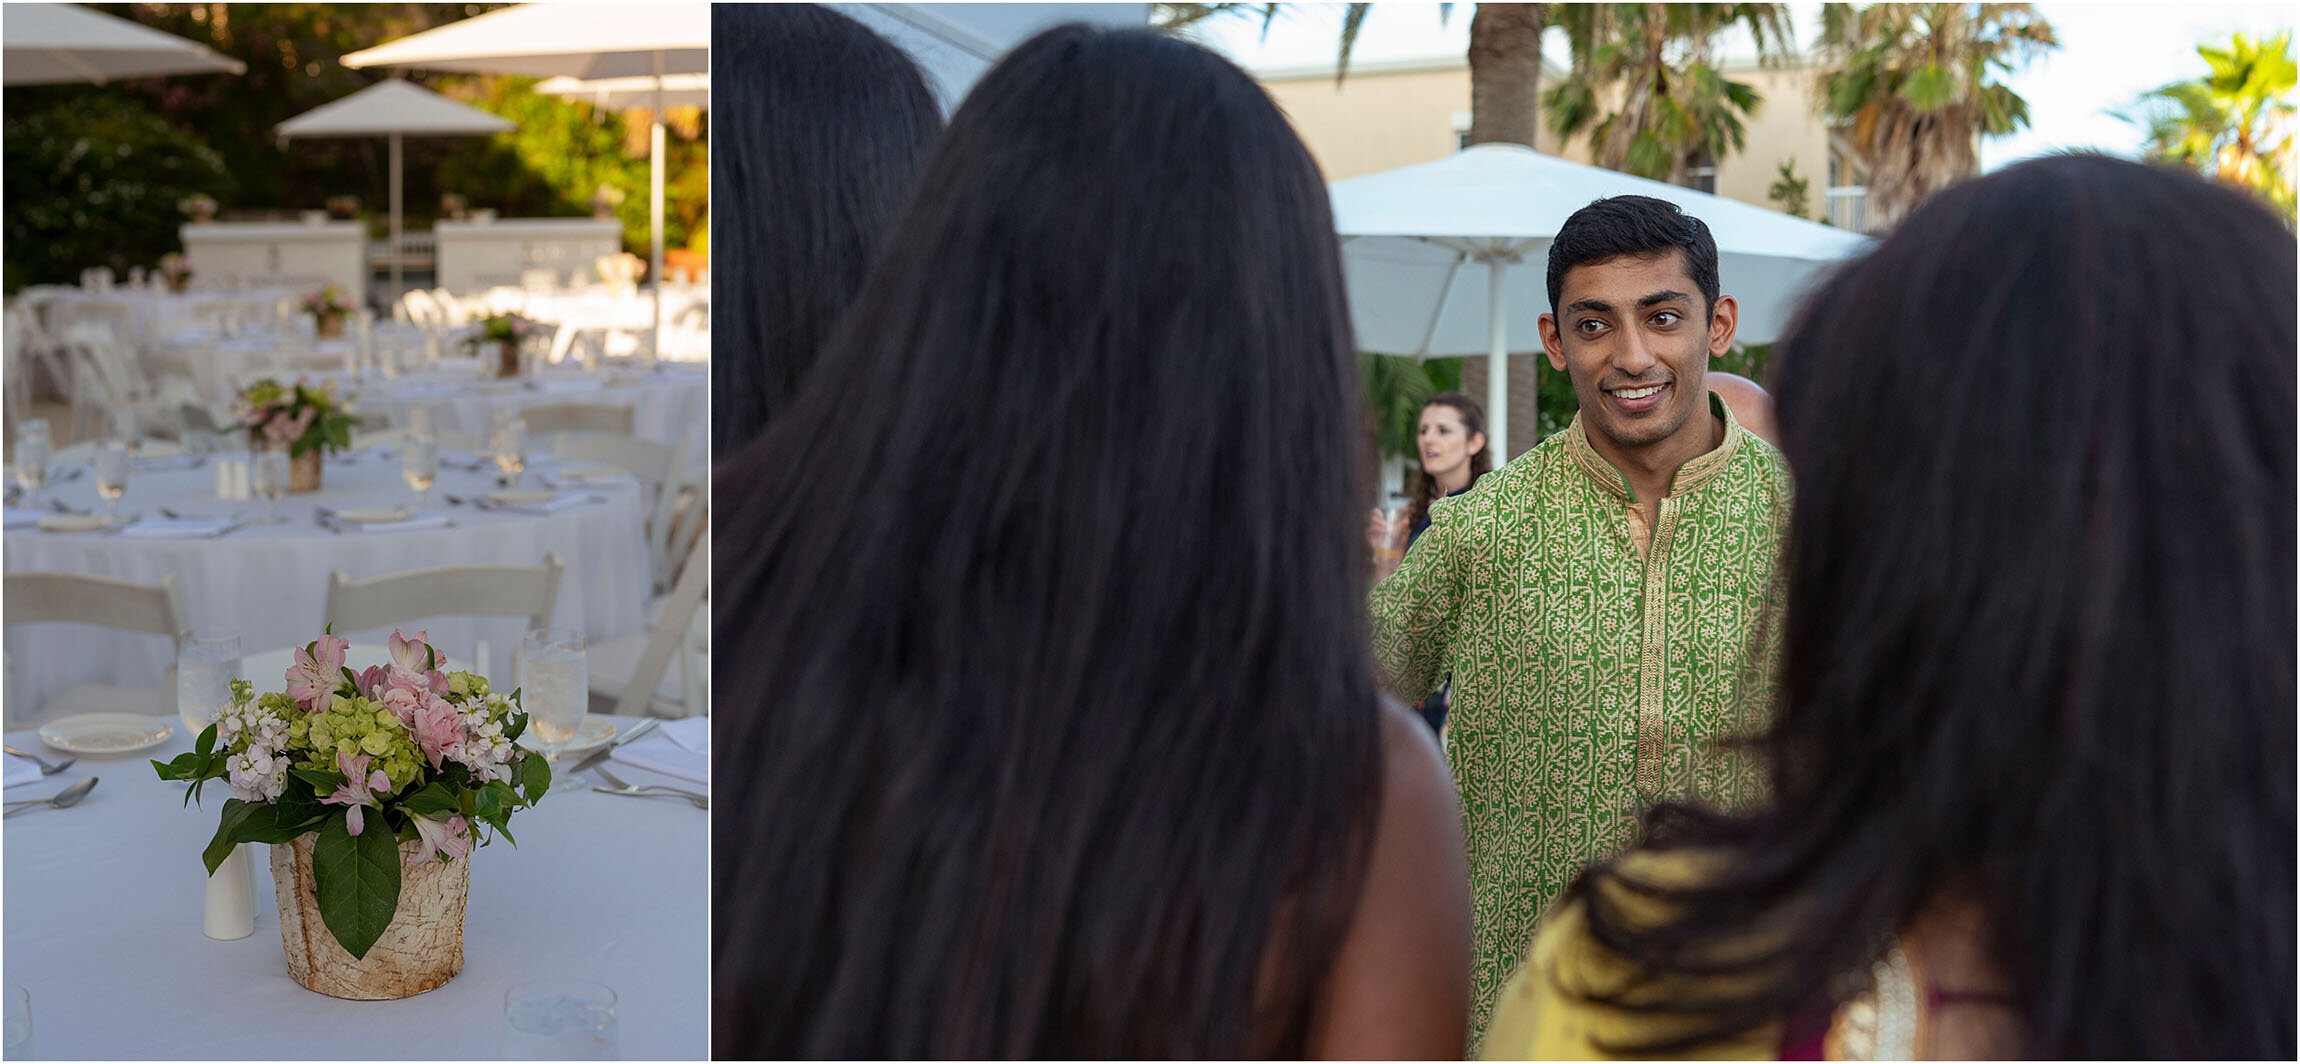 ©FianderFoto_Hindu Wedding Photographer in Bermuda_007.jpg